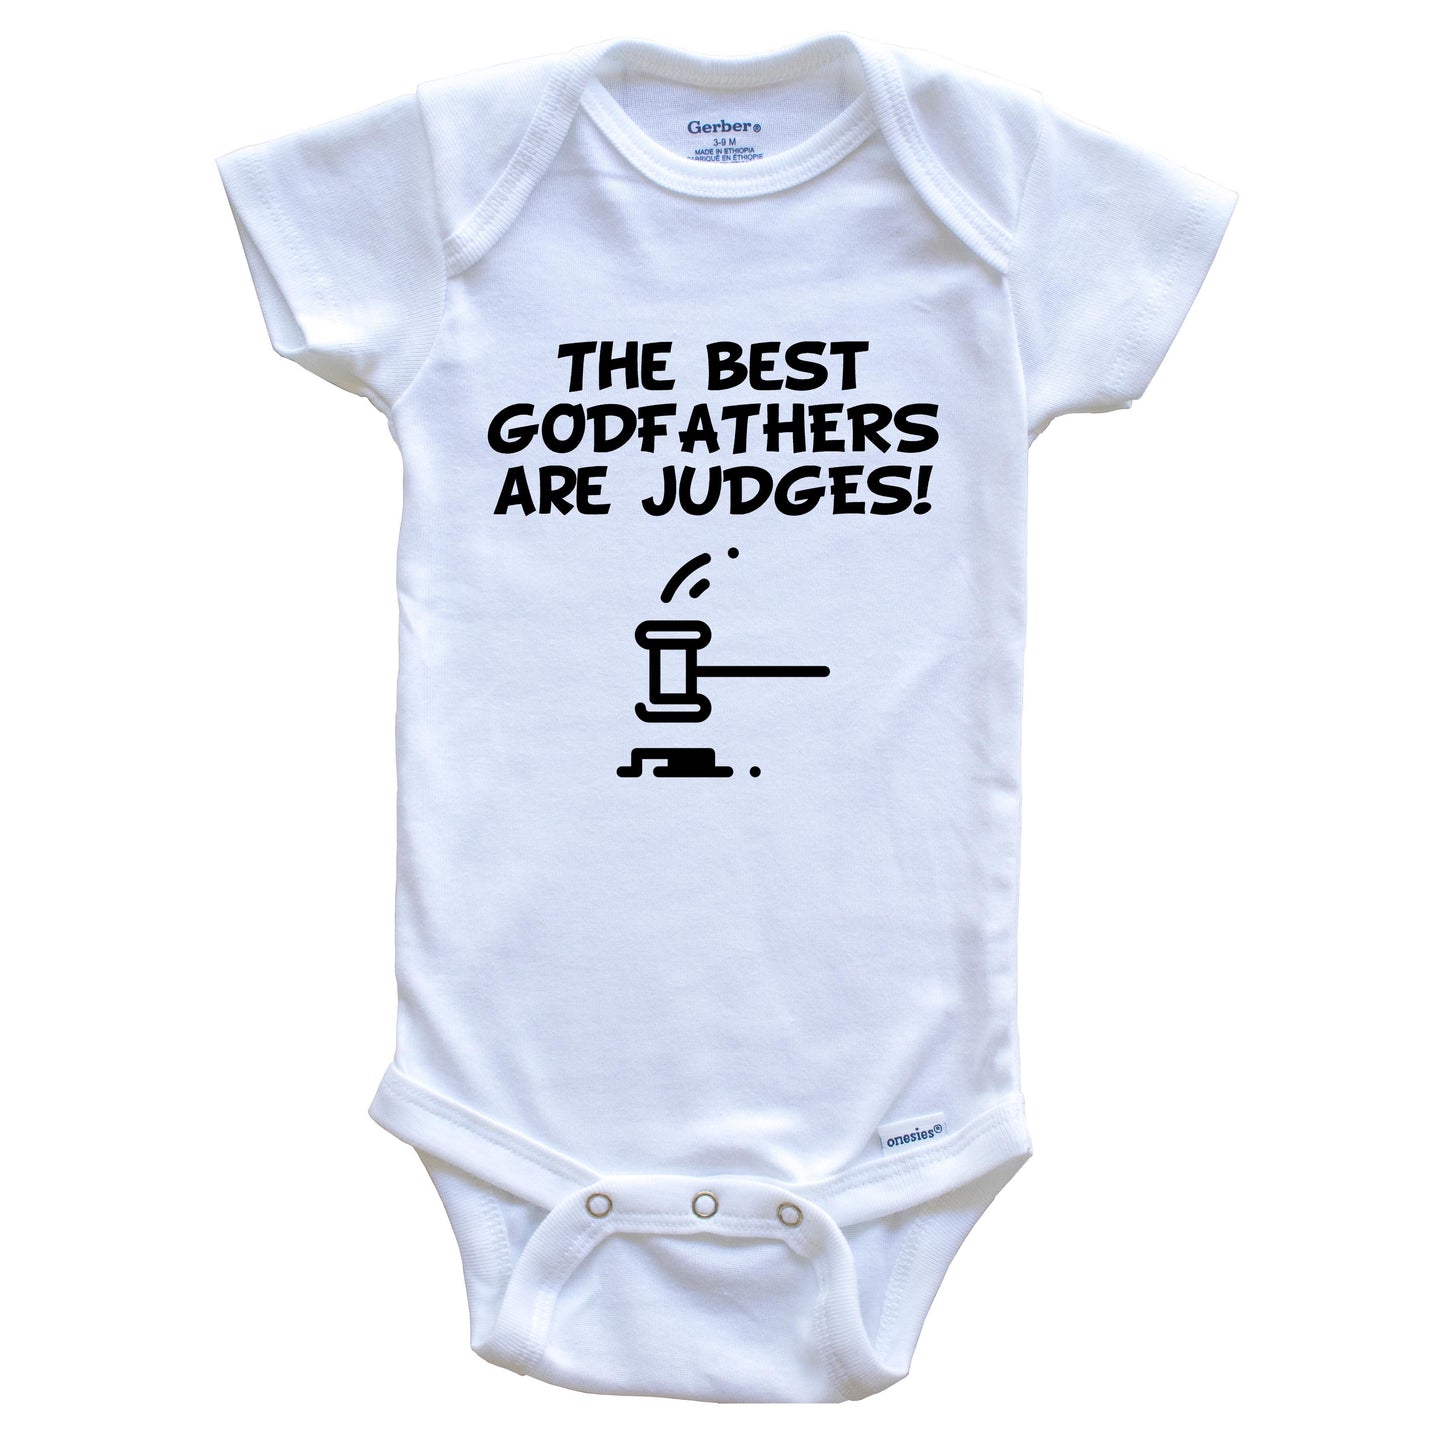 The Best Godfathers Are Judges Funny Godchild Baby Onesie